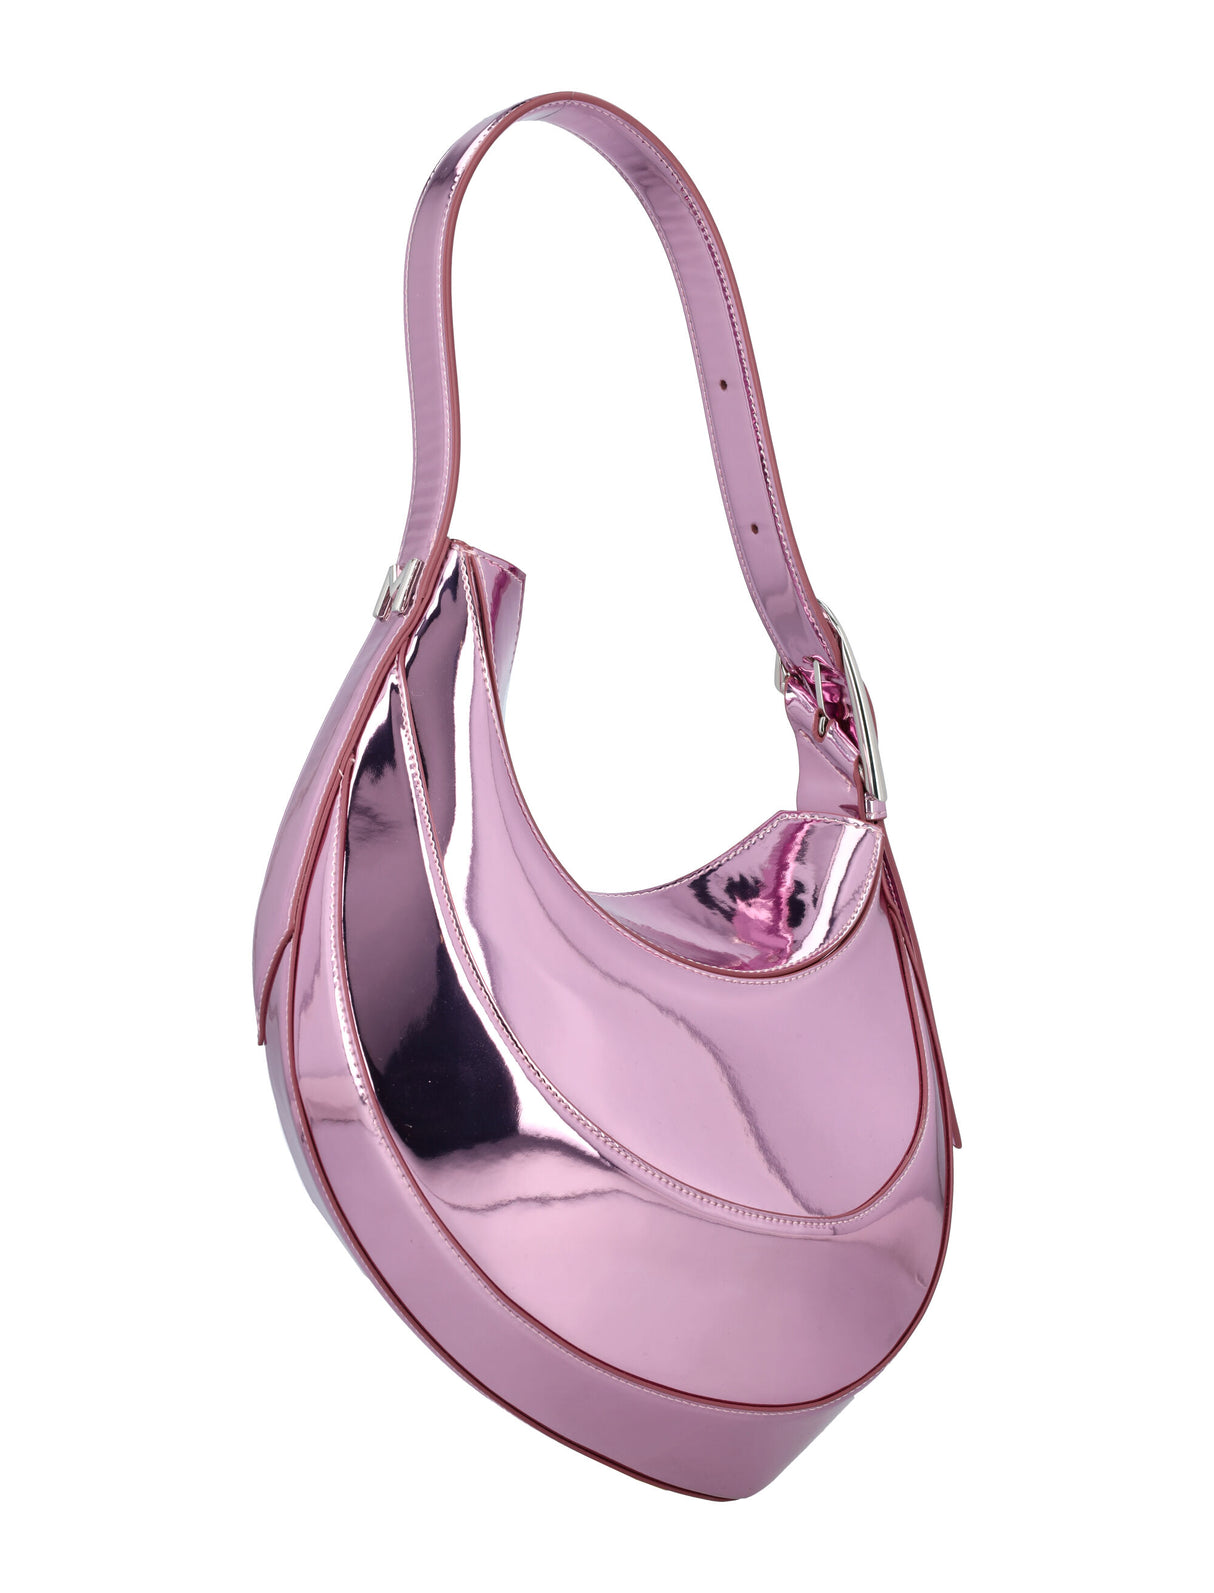 MUGLER Metallic Pink Curve Mini Shoulder Bag with Silver Hardware, 23x25x10cm